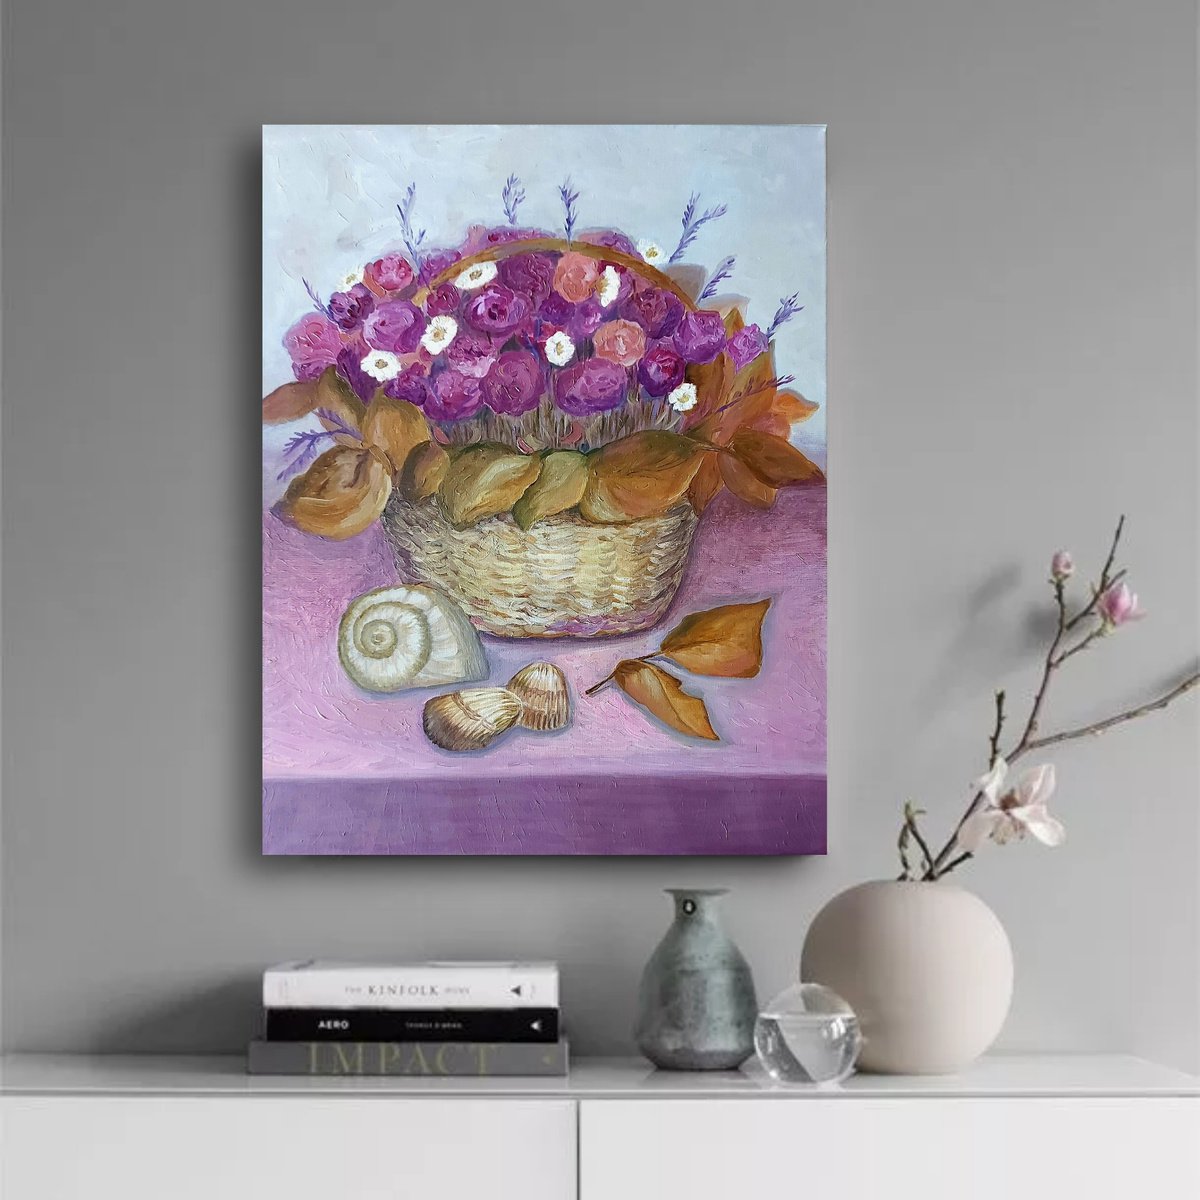 Roses, chamomile, lavender and shells. Pink still life. by Tatiana Popova